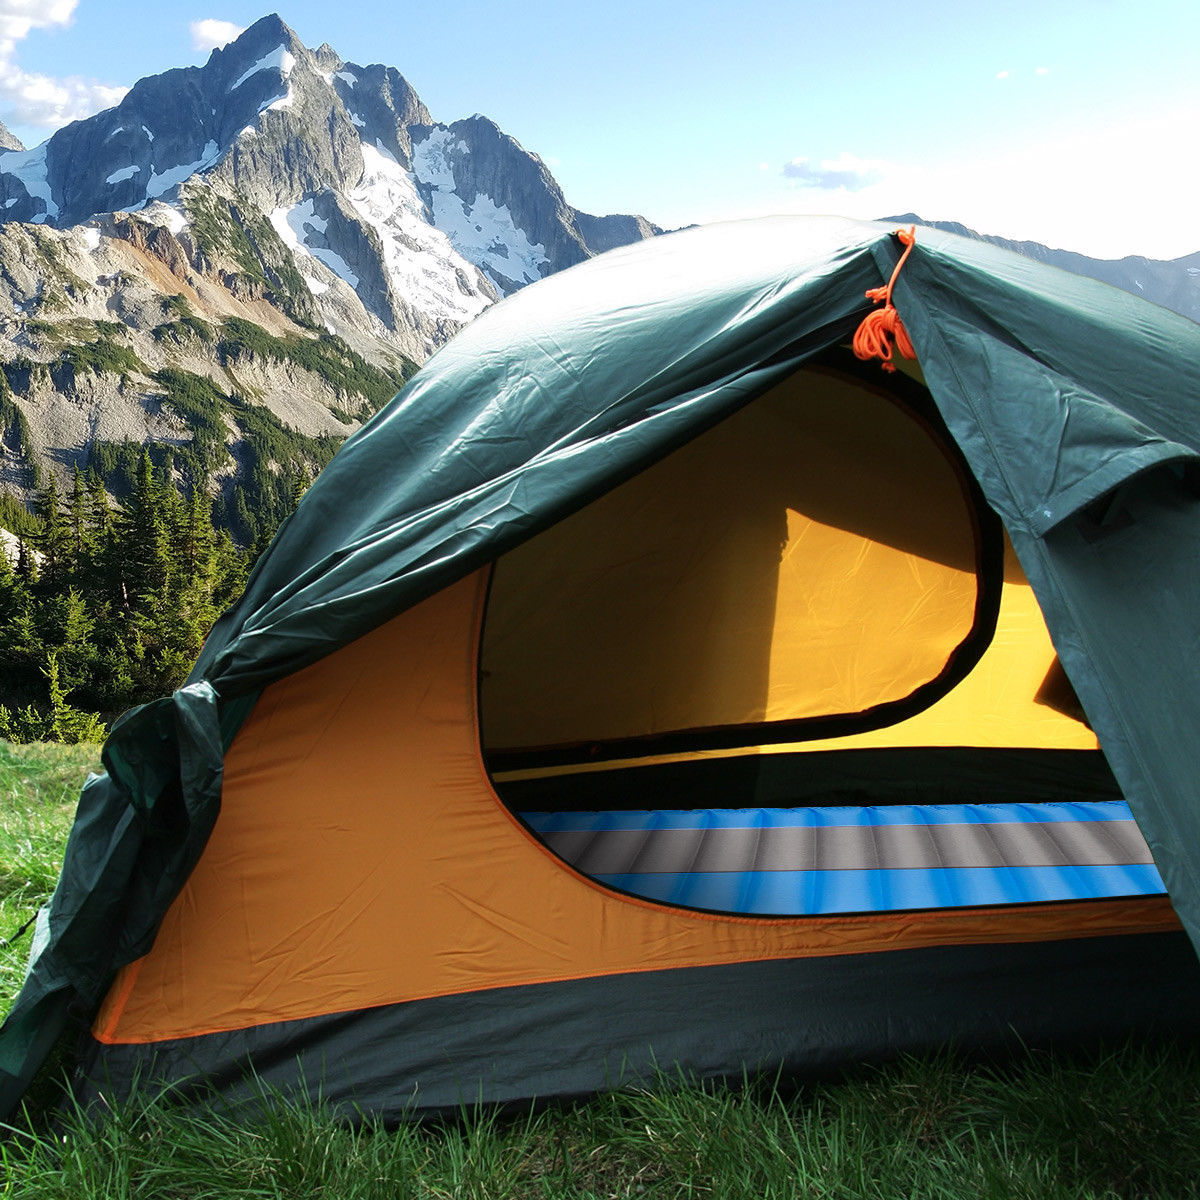 Elastic-Sponge-Outdoor-Camping-Inflatable-Sleeping-Pad-Ultralight-Air-Mat-Mattresses-Hiking-Inflatab-1337011-4